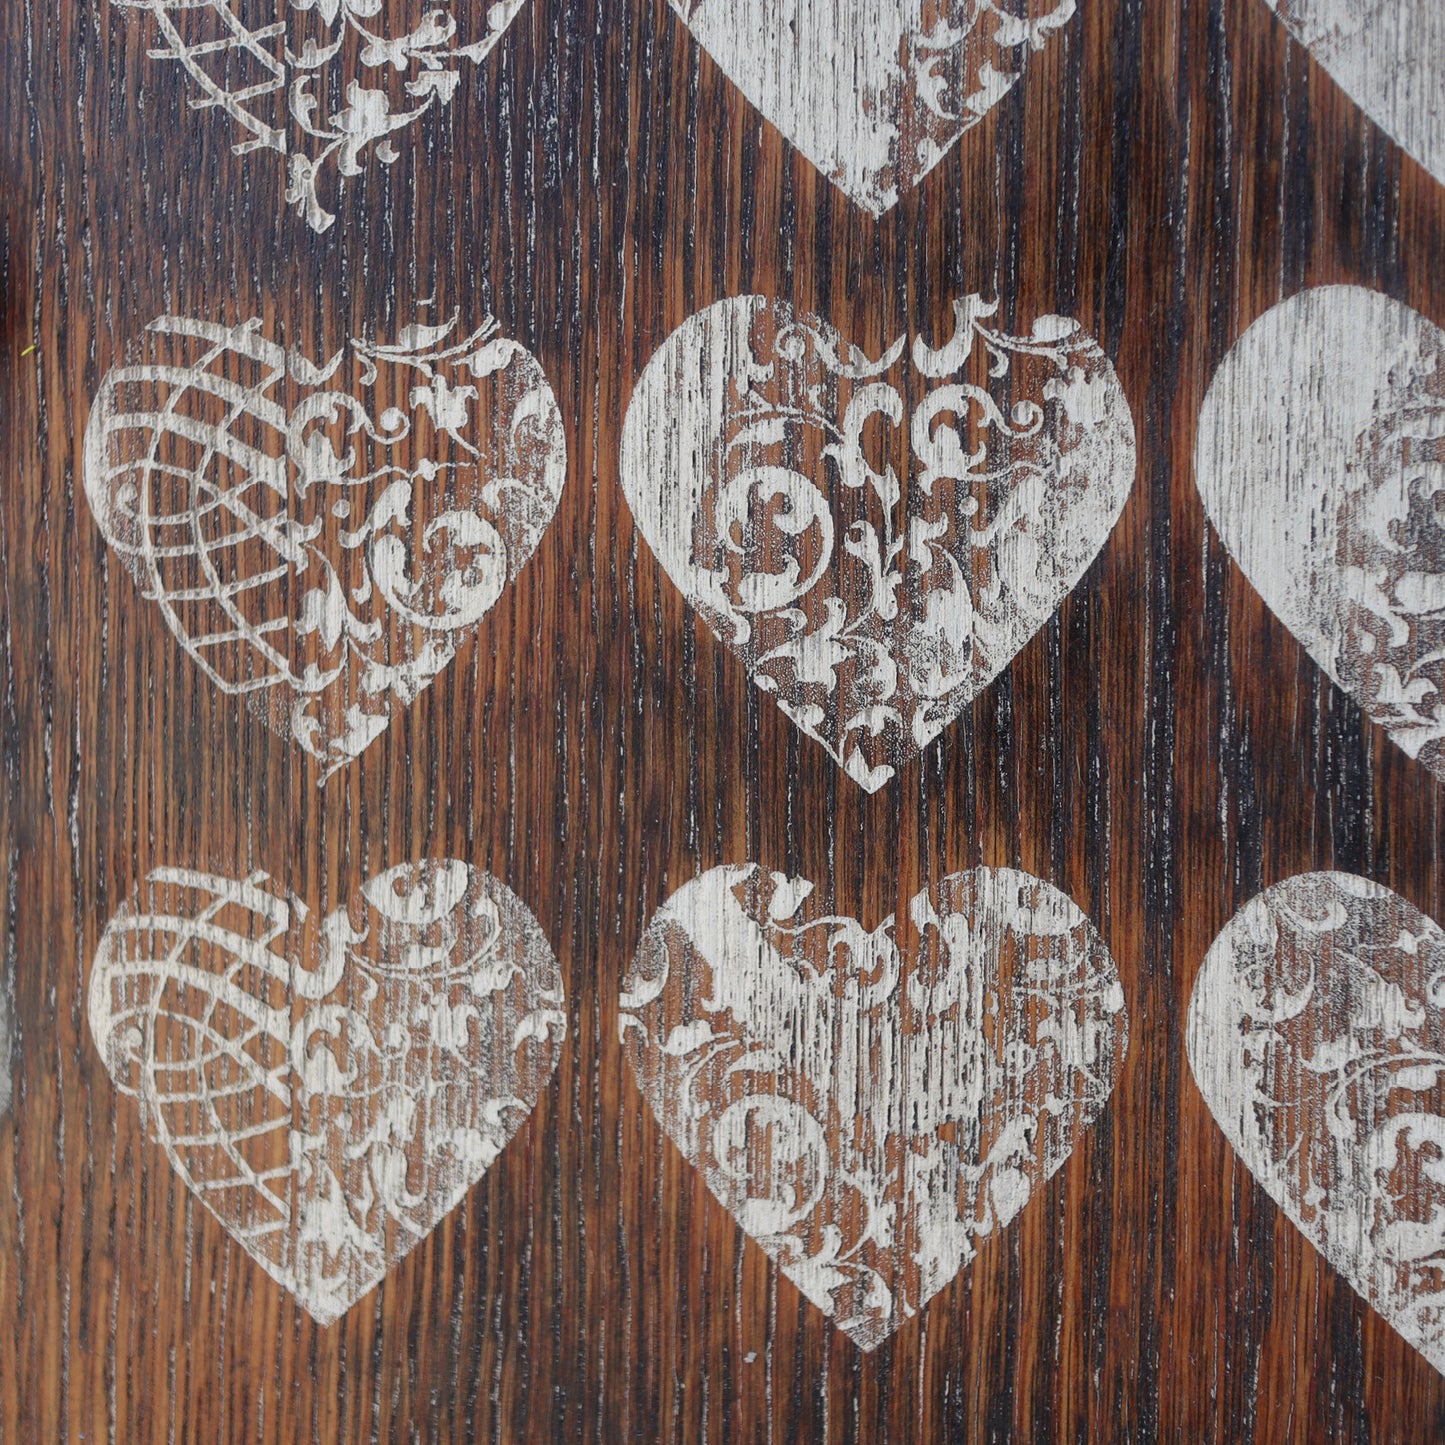 Ornamental Engraved Hearts Artwork